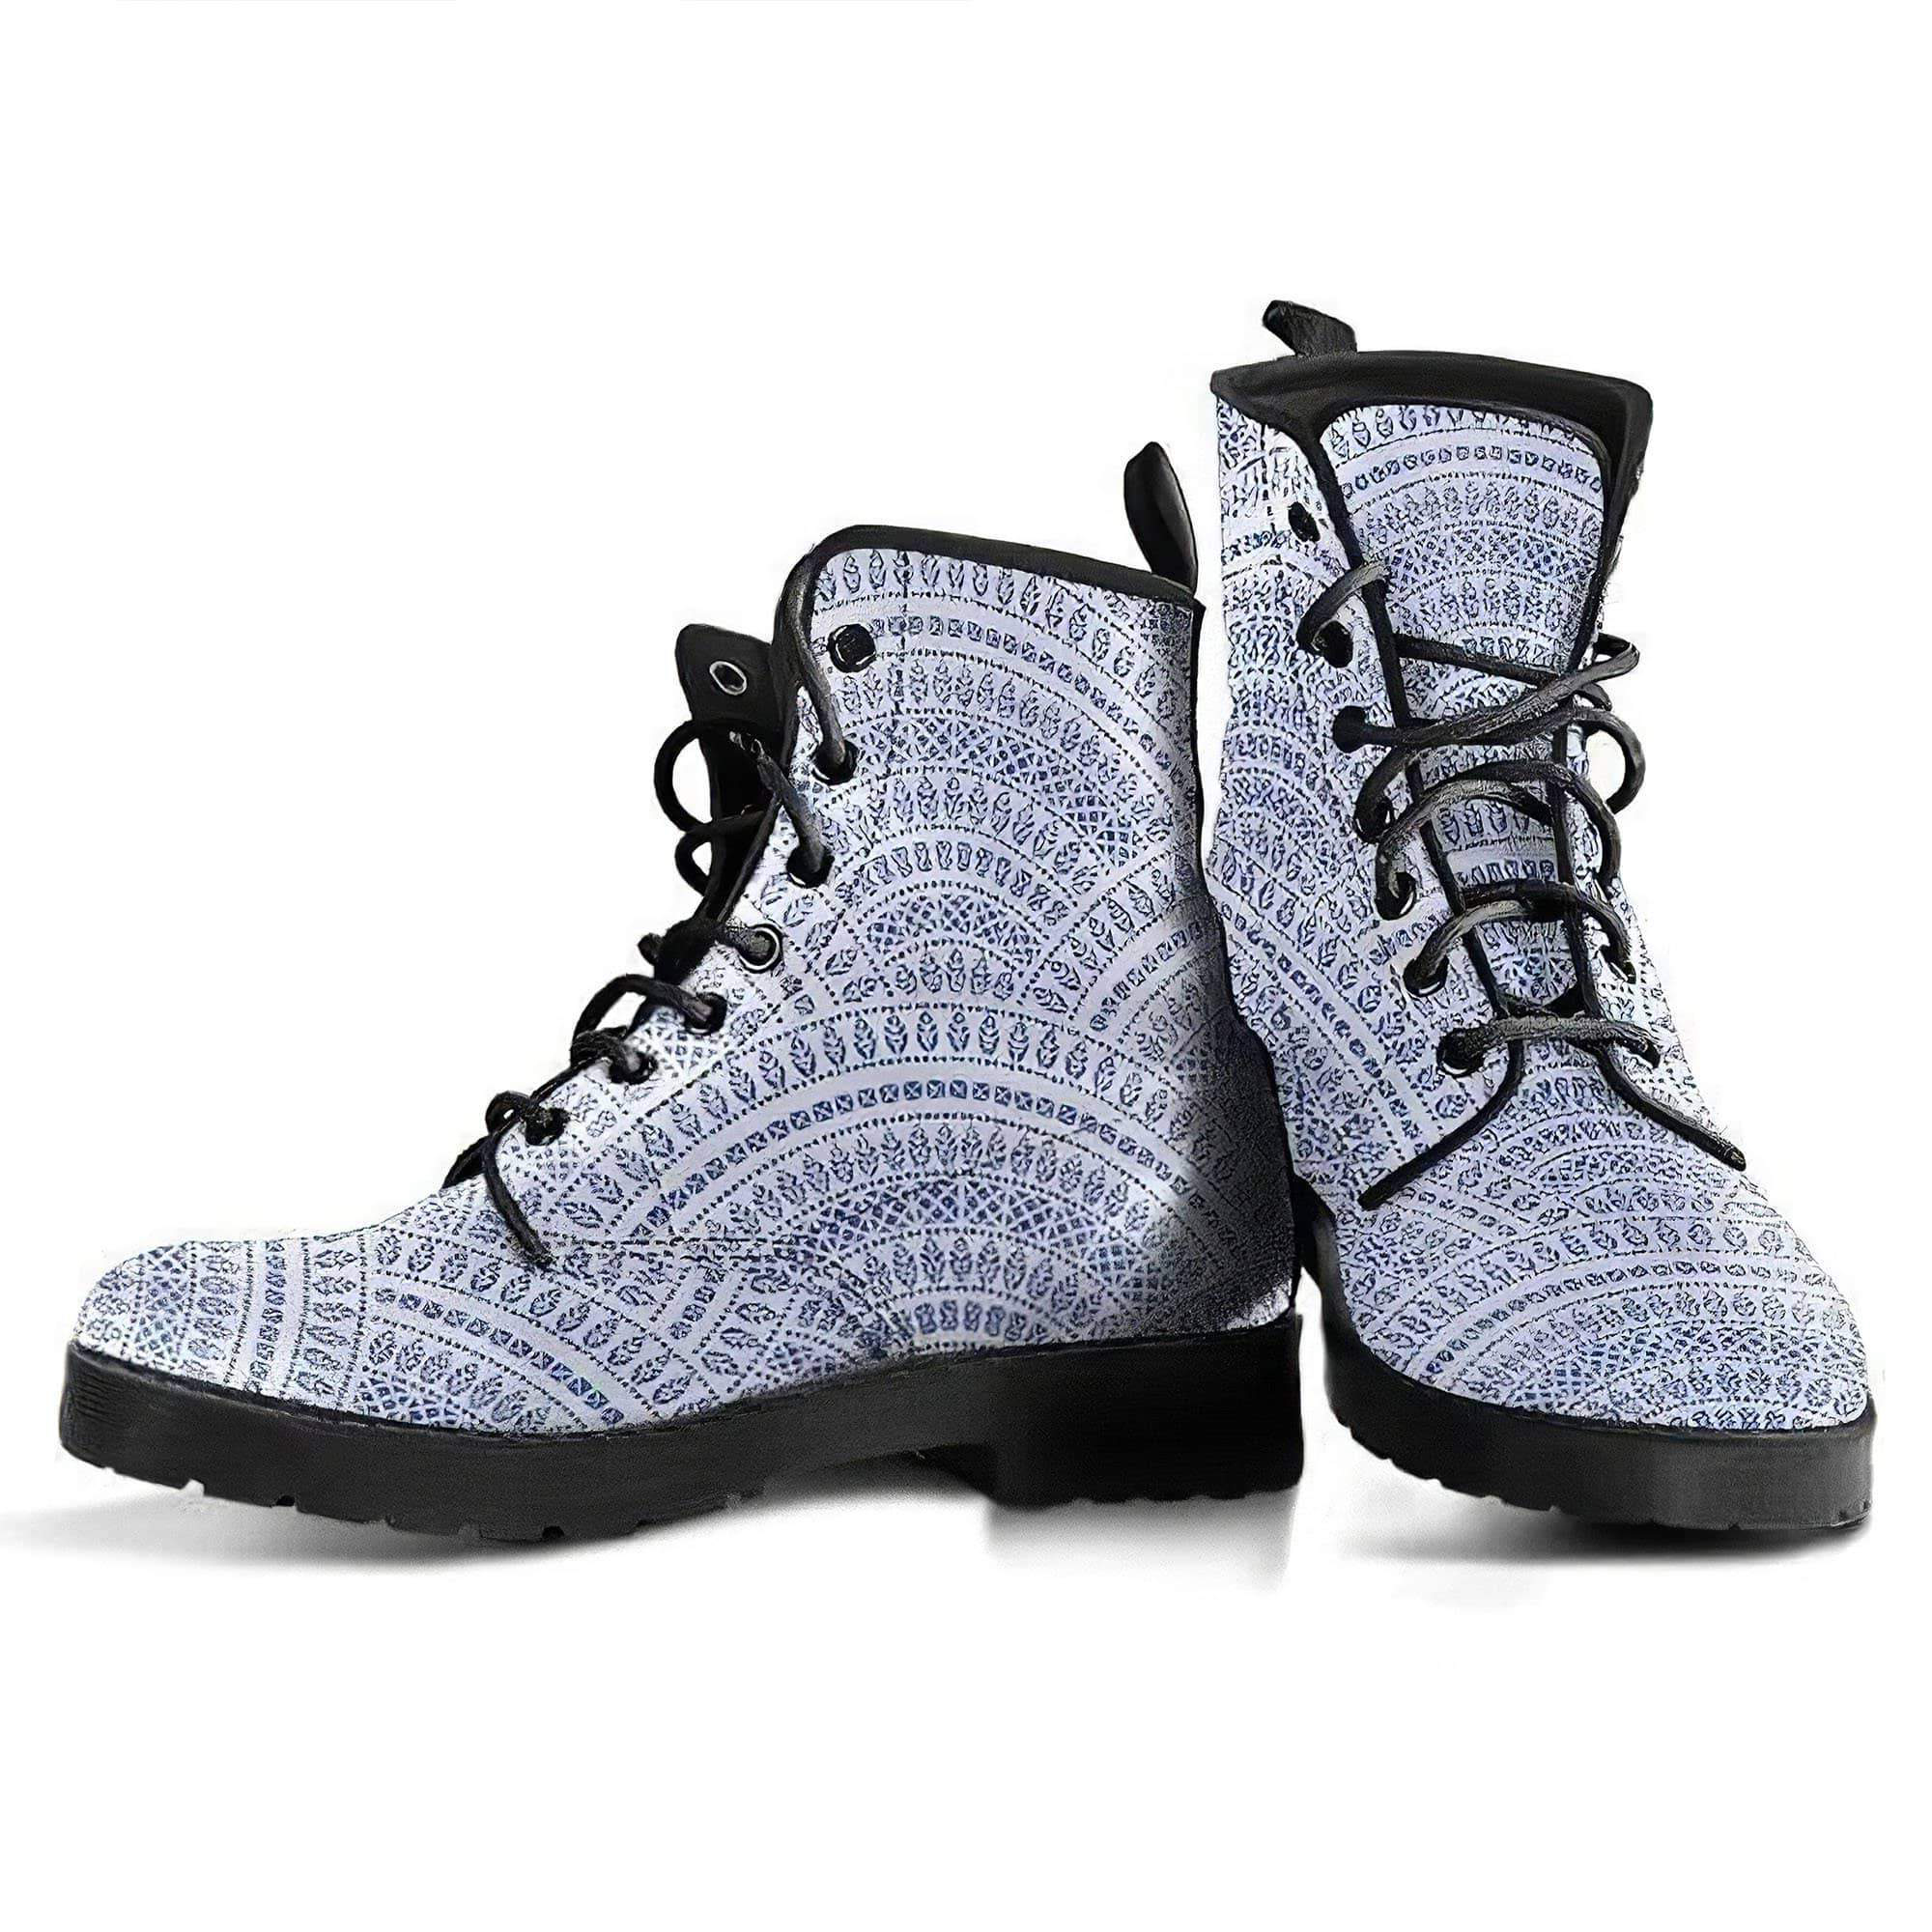 zen-5-handcrafted-boots-women-s-leather-boots-12051991003197.jpg